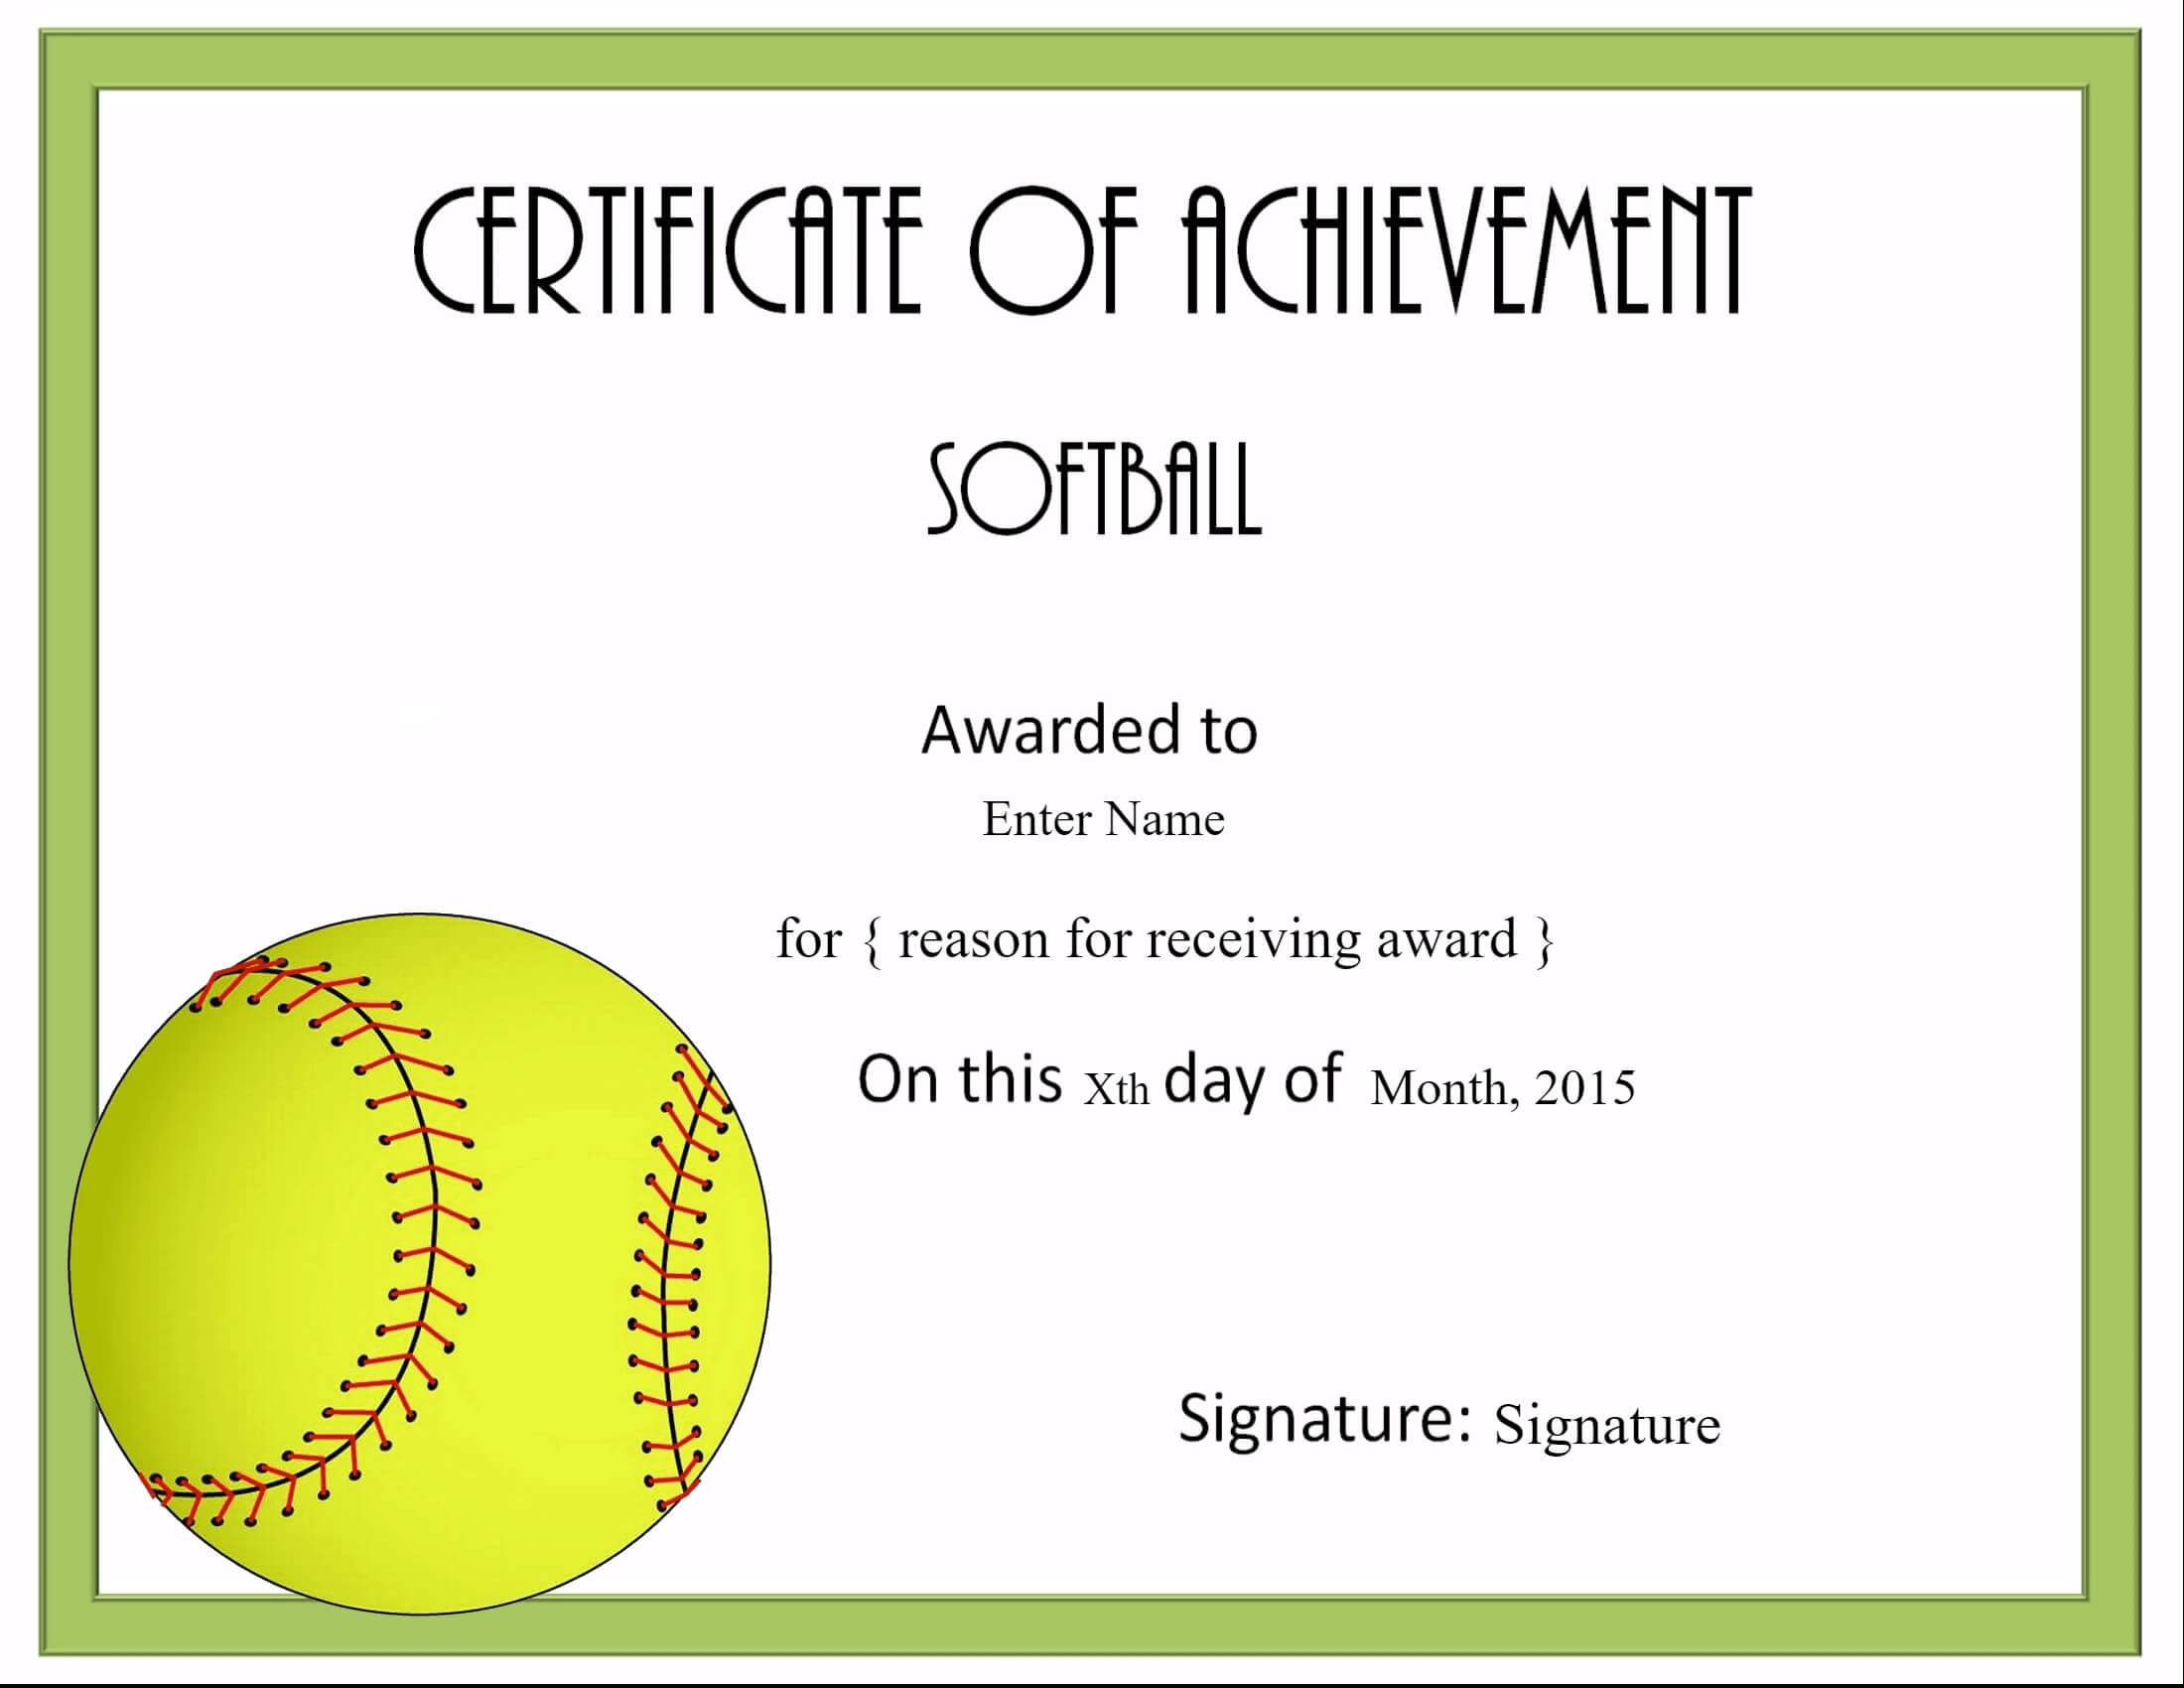 Free Softball Certificate Templates - Customize Online With Regard To Softball Award Certificate Template